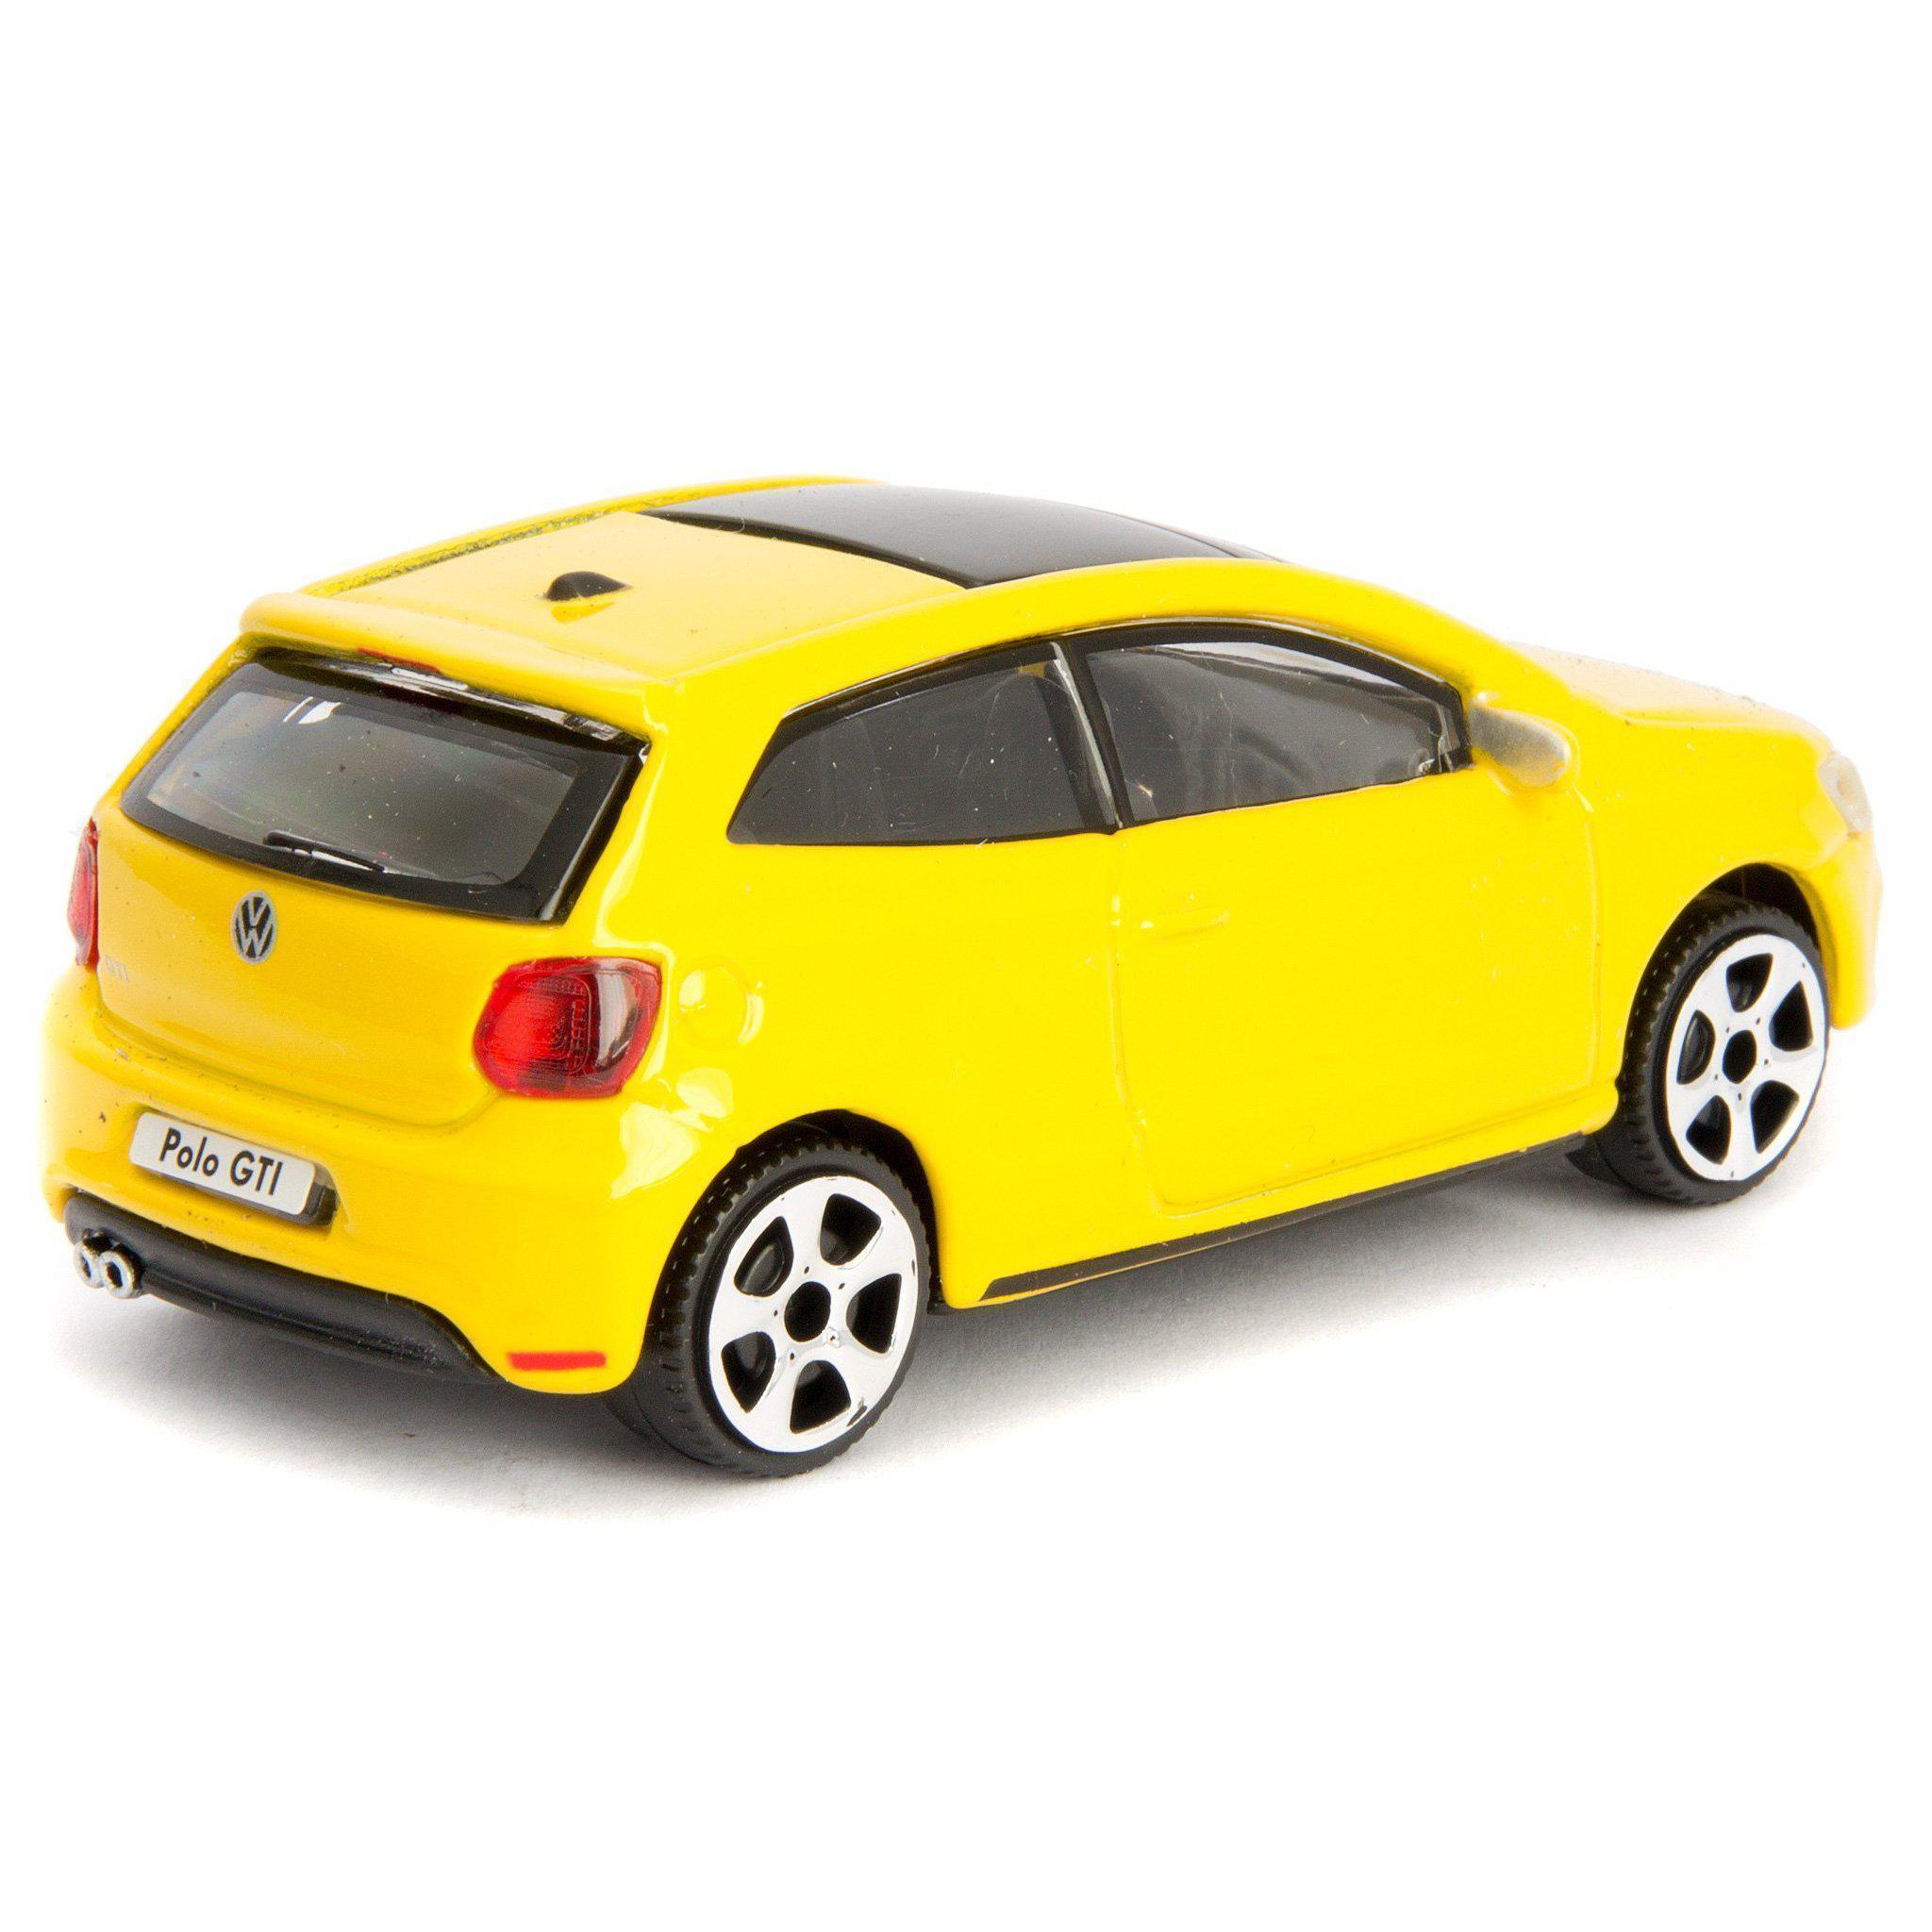 Volkswagen Polo GTi Mk5 Diecast Toy Car yellow - 1:43 Scale-Bburago-Diecast Model Centre